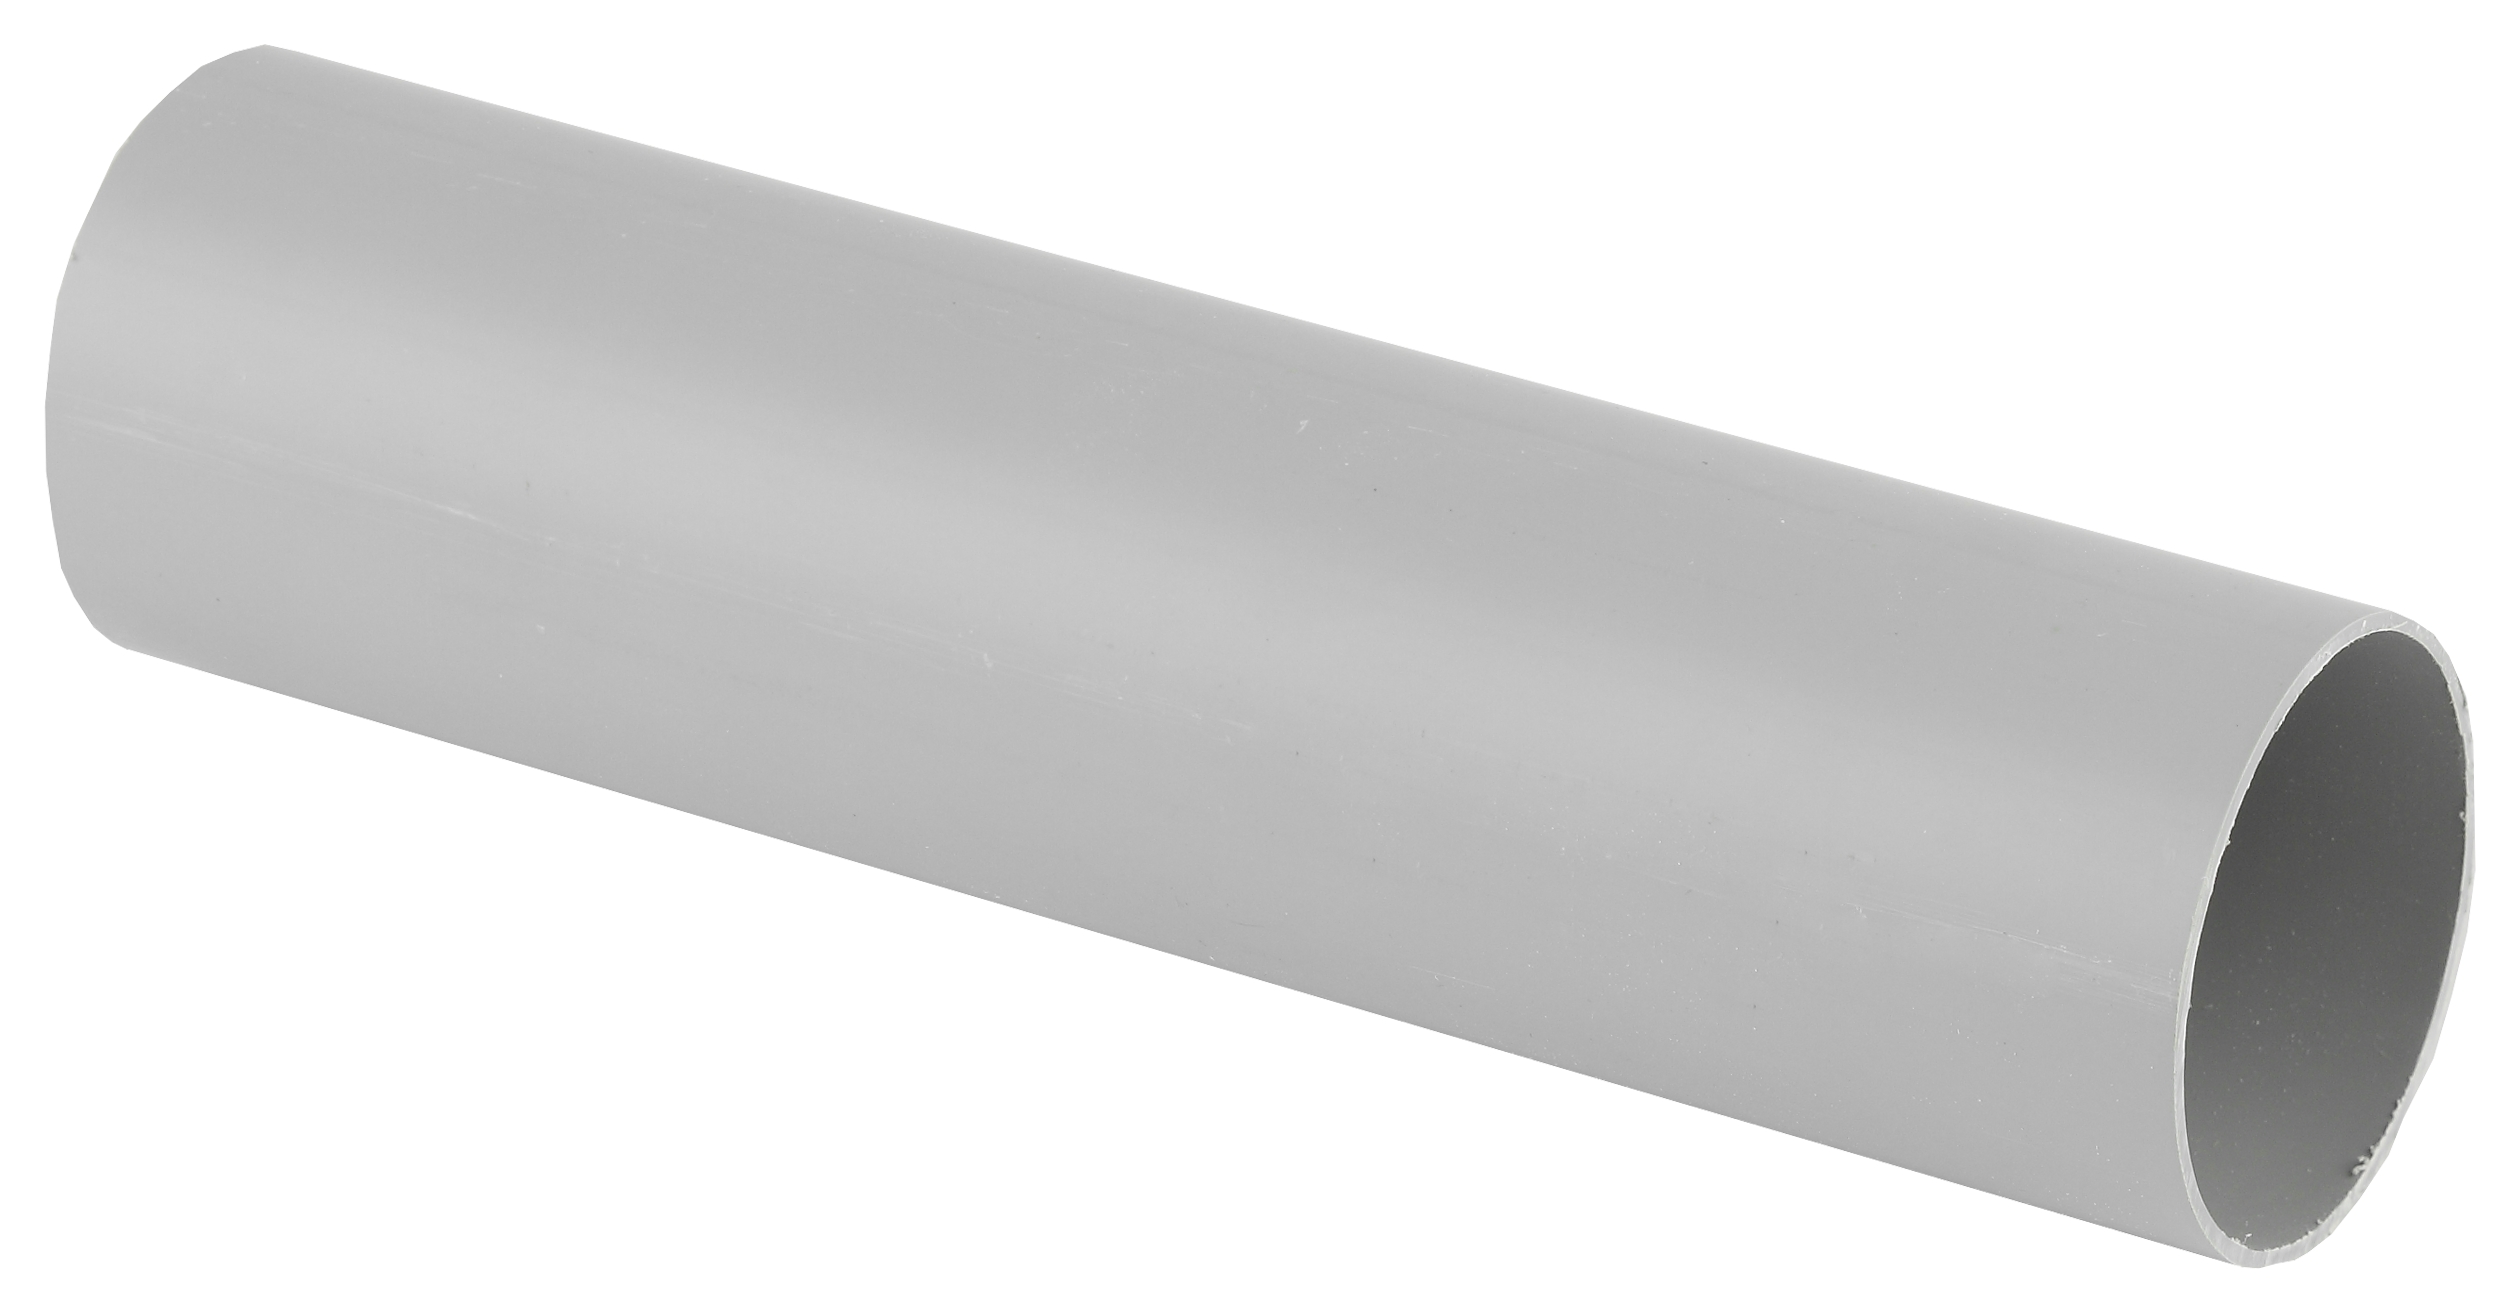 ЭРА Муфта соедин. (серый)  для трубы d 20мм IP44 (5шт) (5/500/15000)